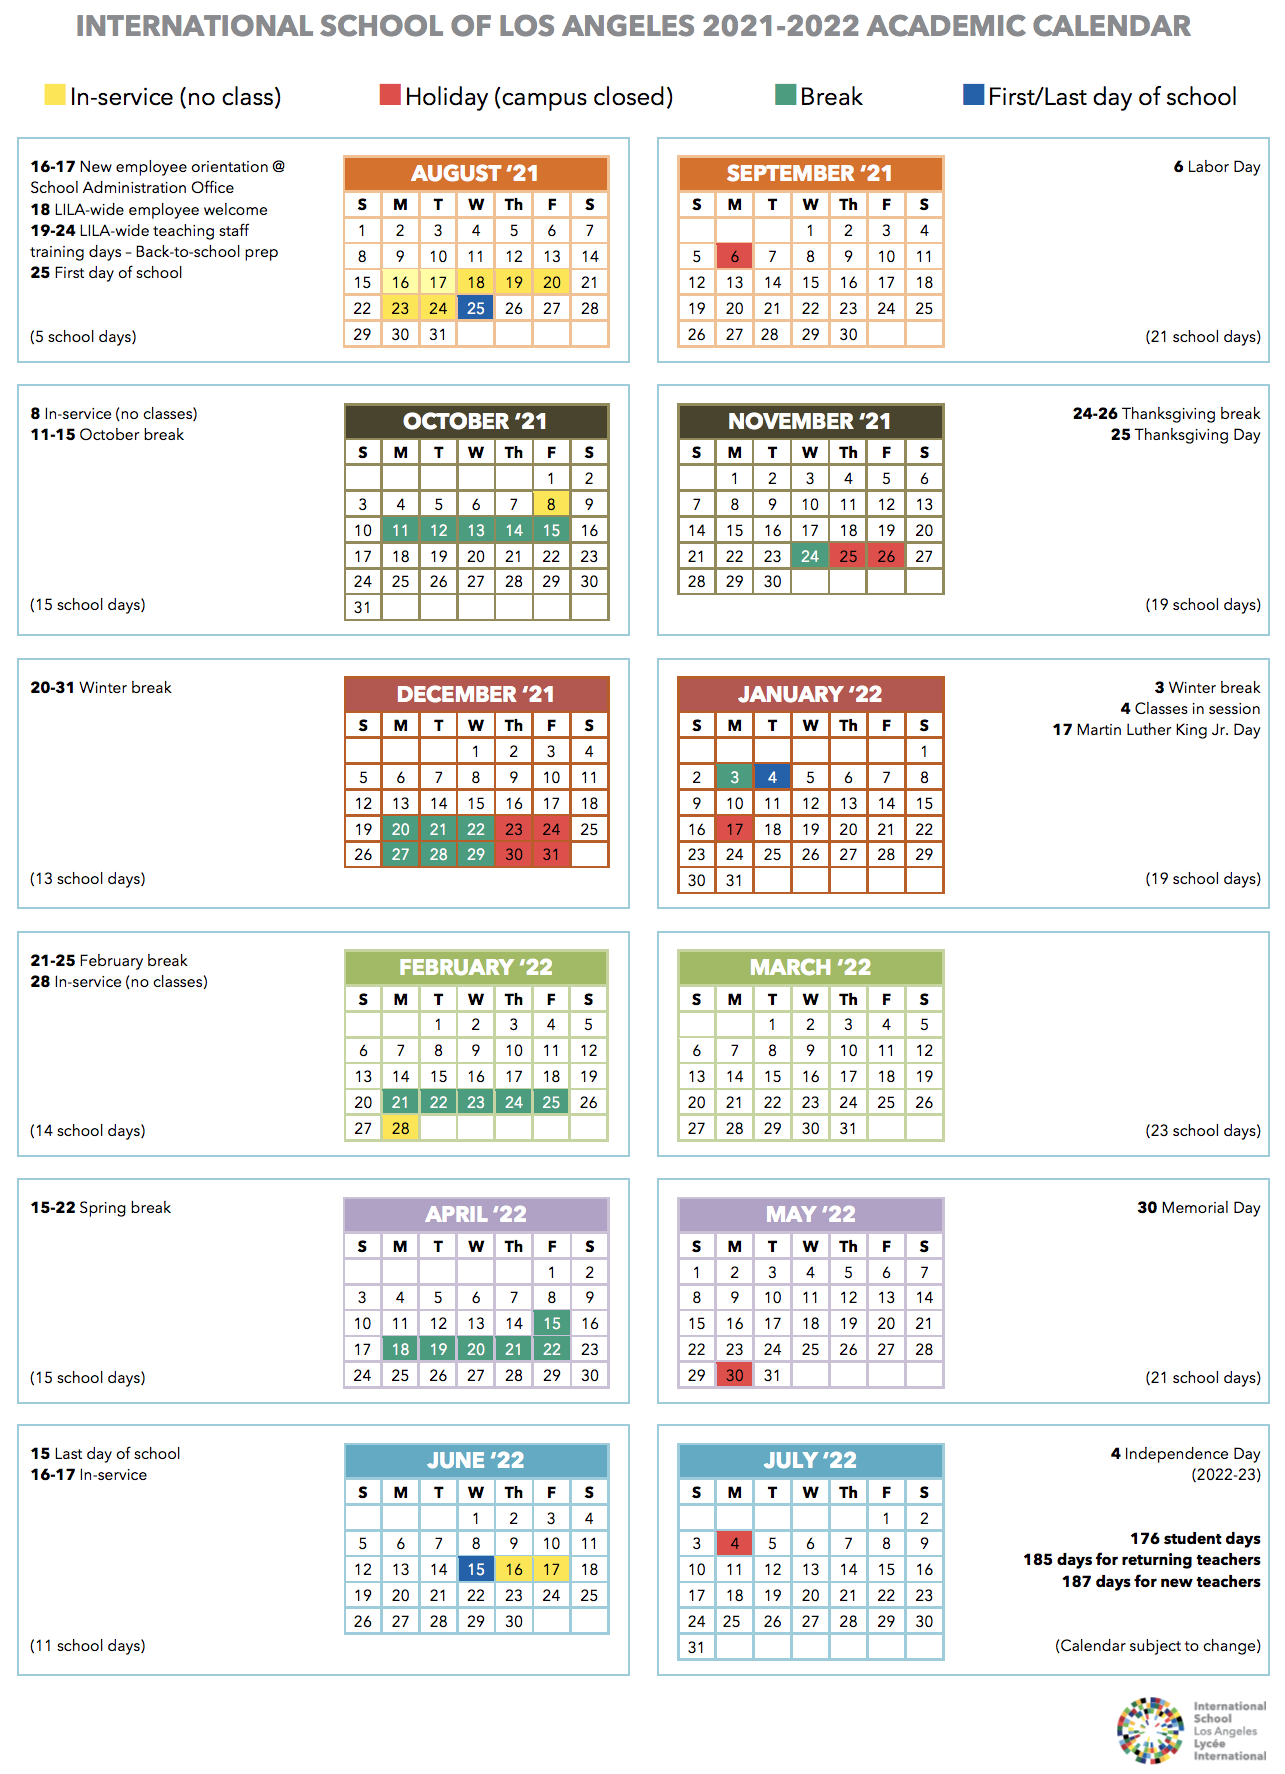 Csulb 2022 2023 Calendar Calendar | International School Of Los Angeles